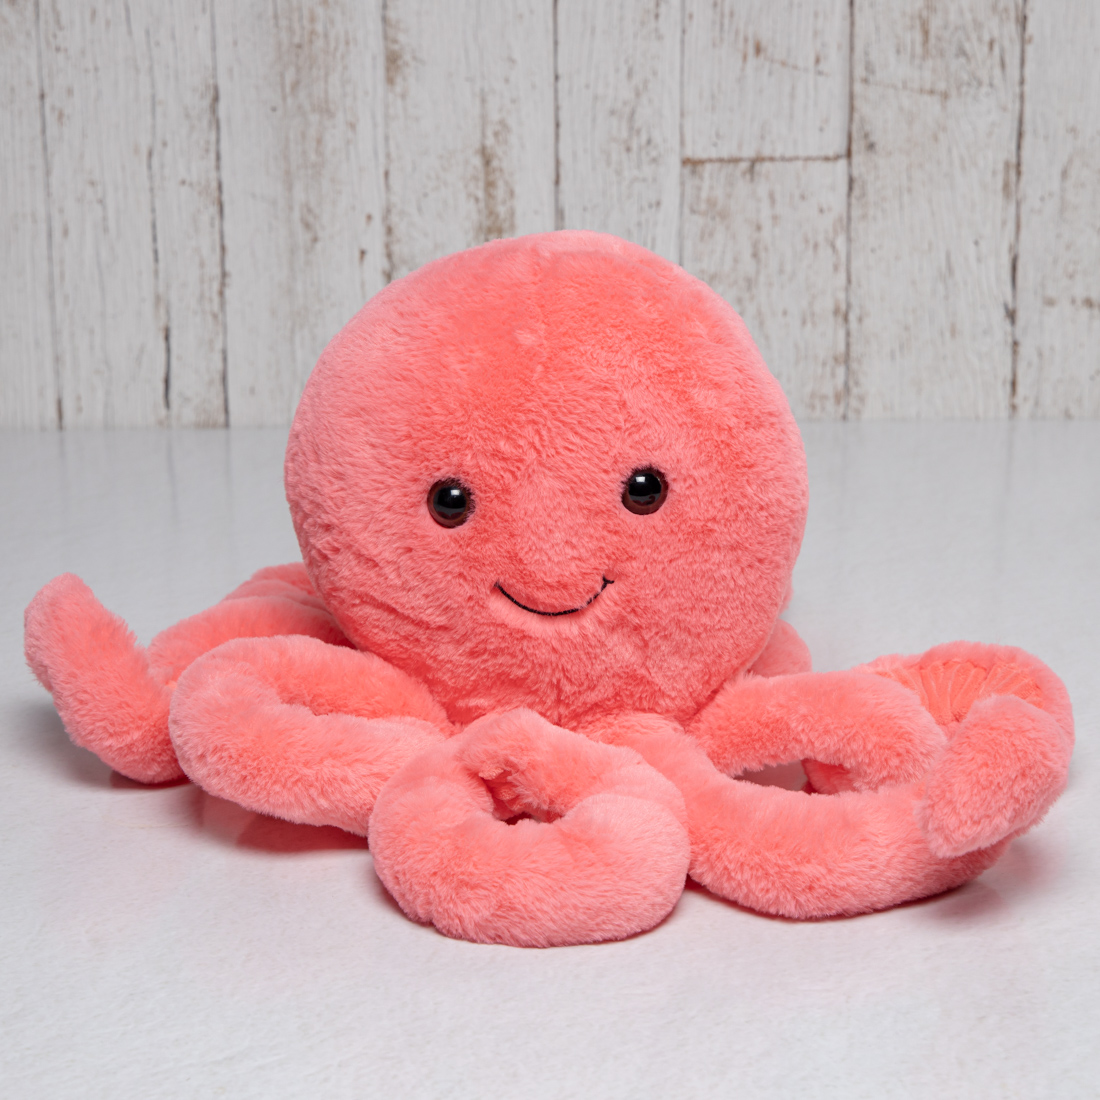 Toys Cracker Barrel - octopus piggy roblox